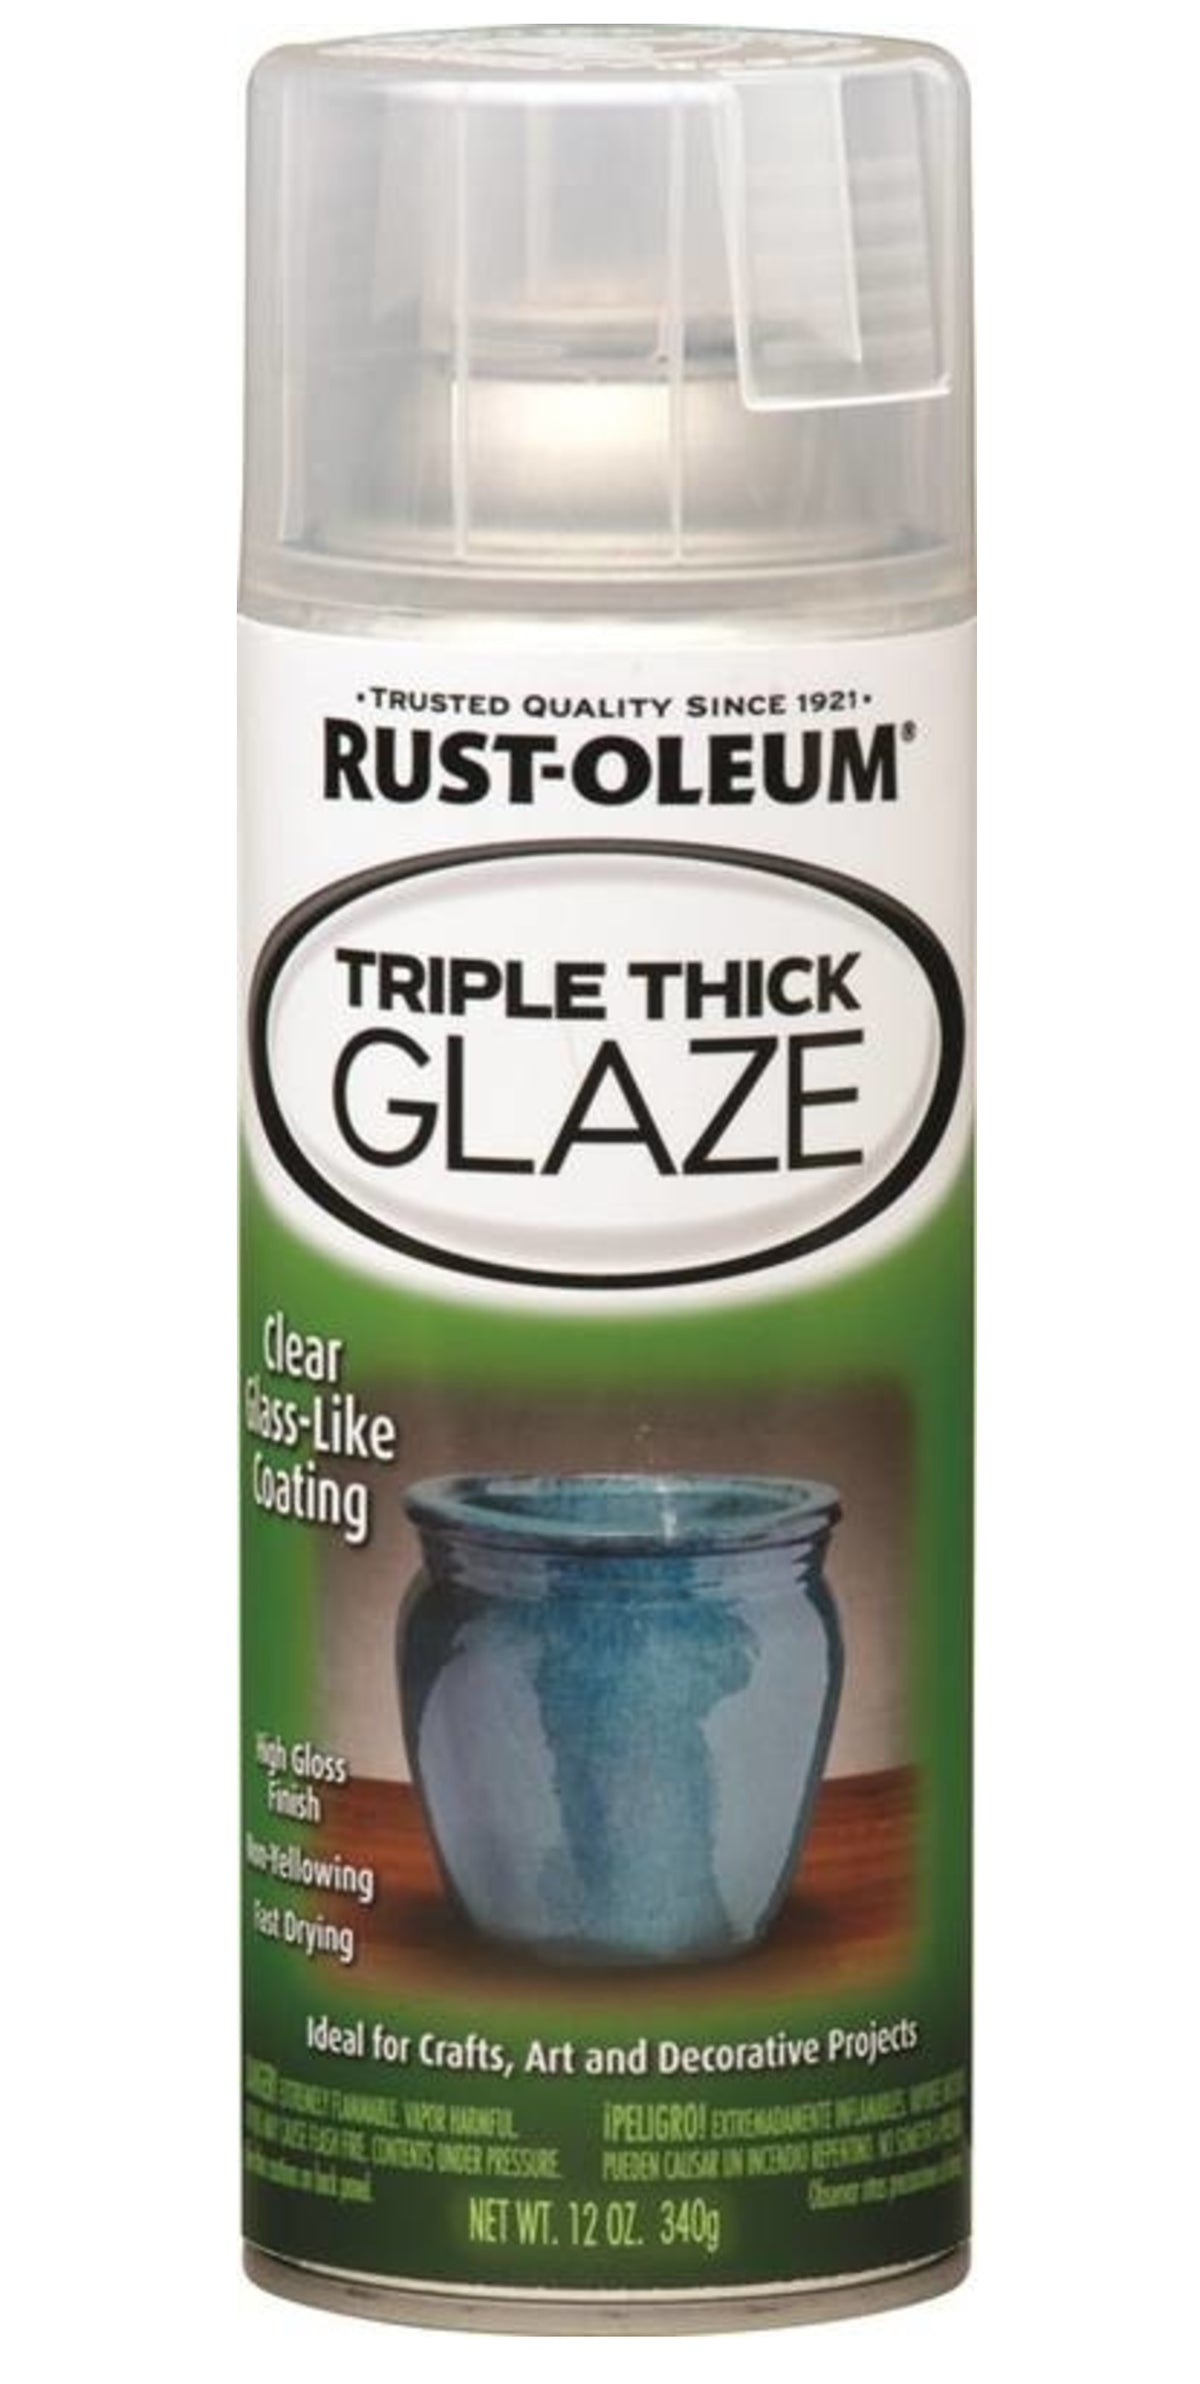 Rust-Oleum 264985 Specialty Triple Thick Glaze Spray Paint, 12 Oz